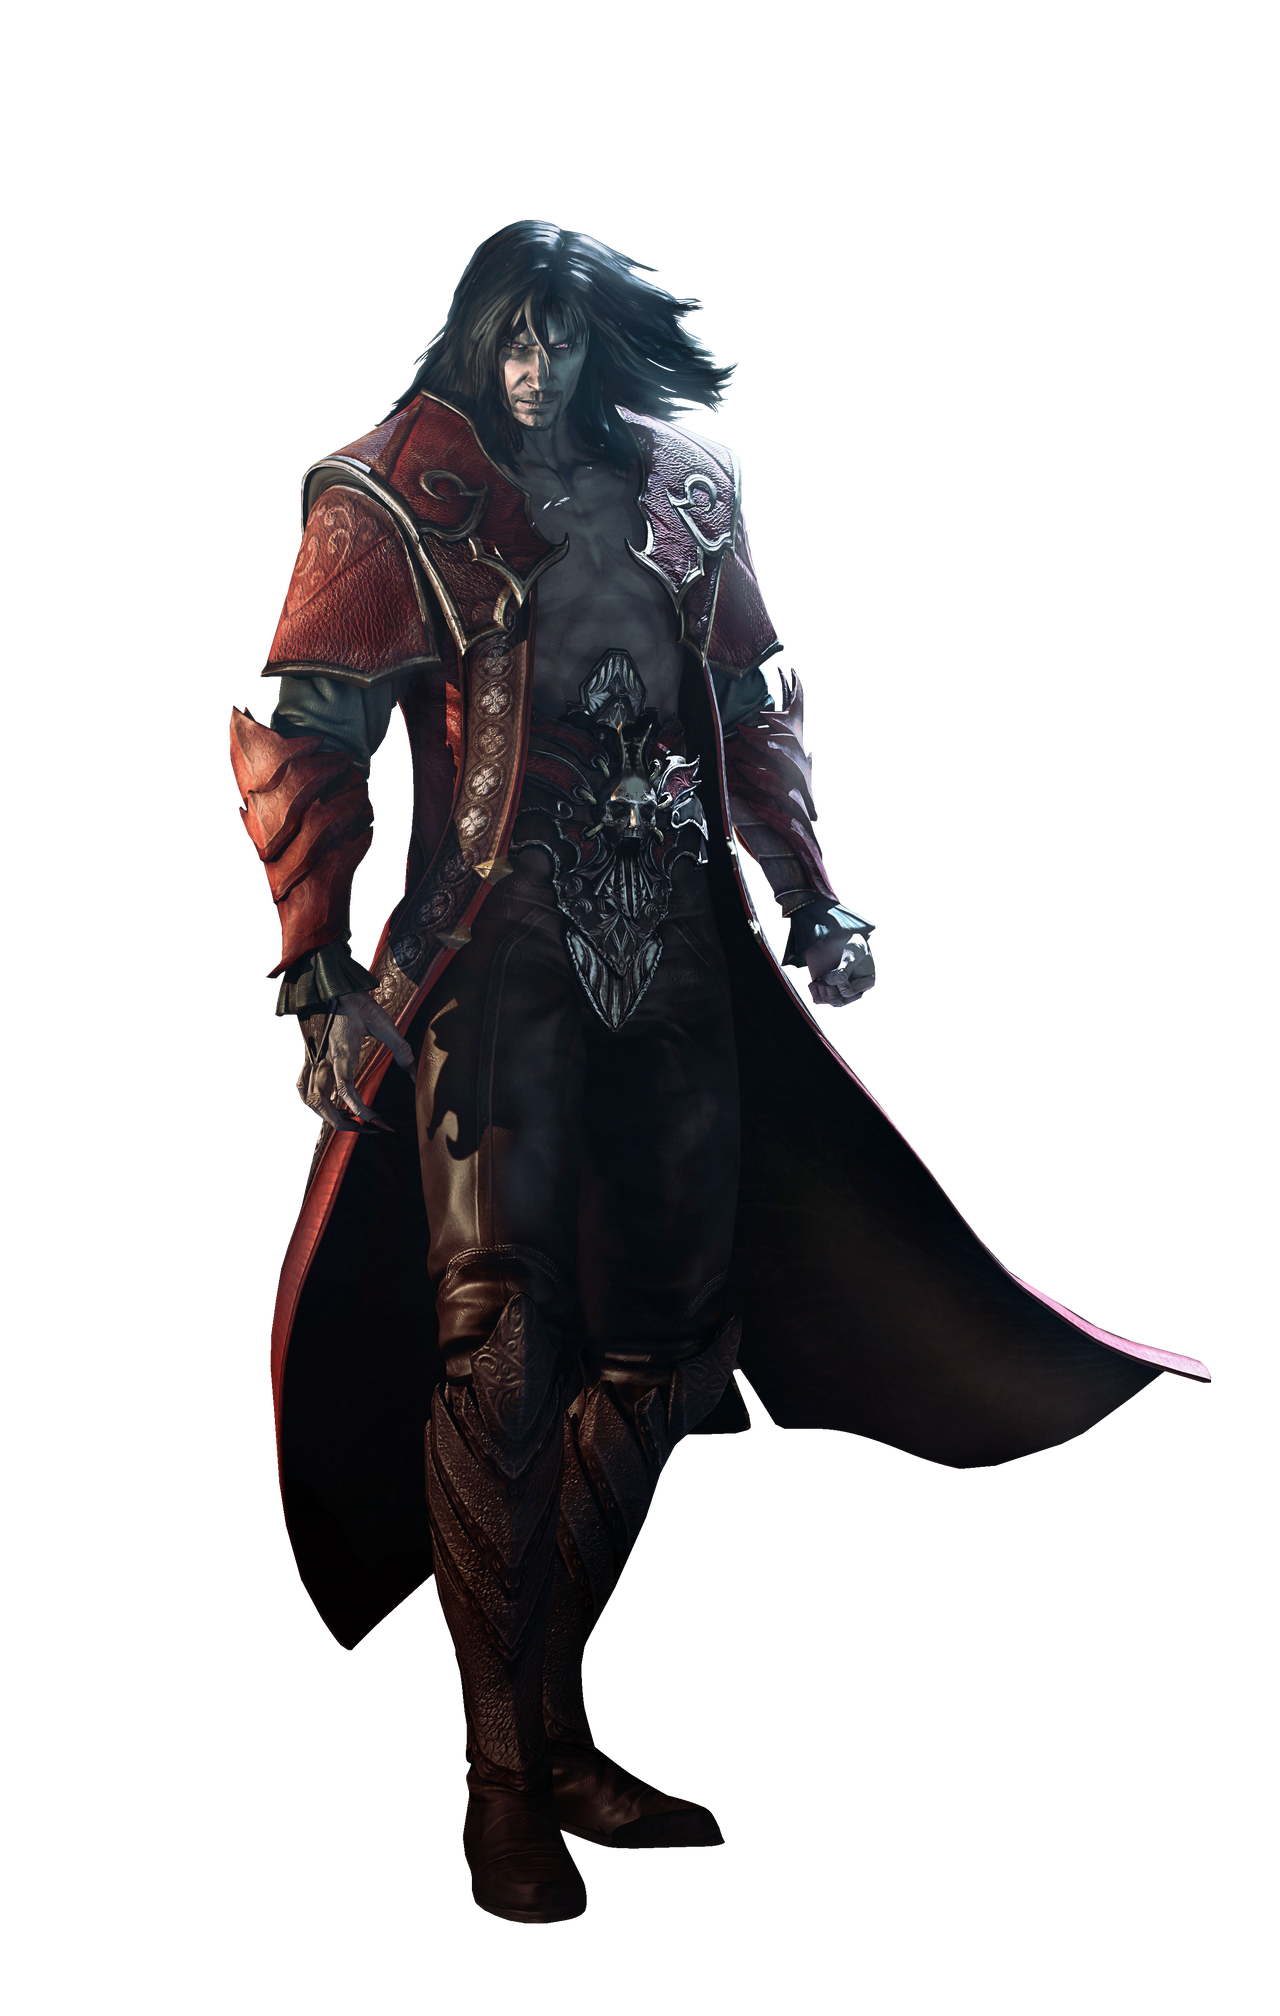 Castlevania: Lords of Shadow 2, Castlevania Wiki